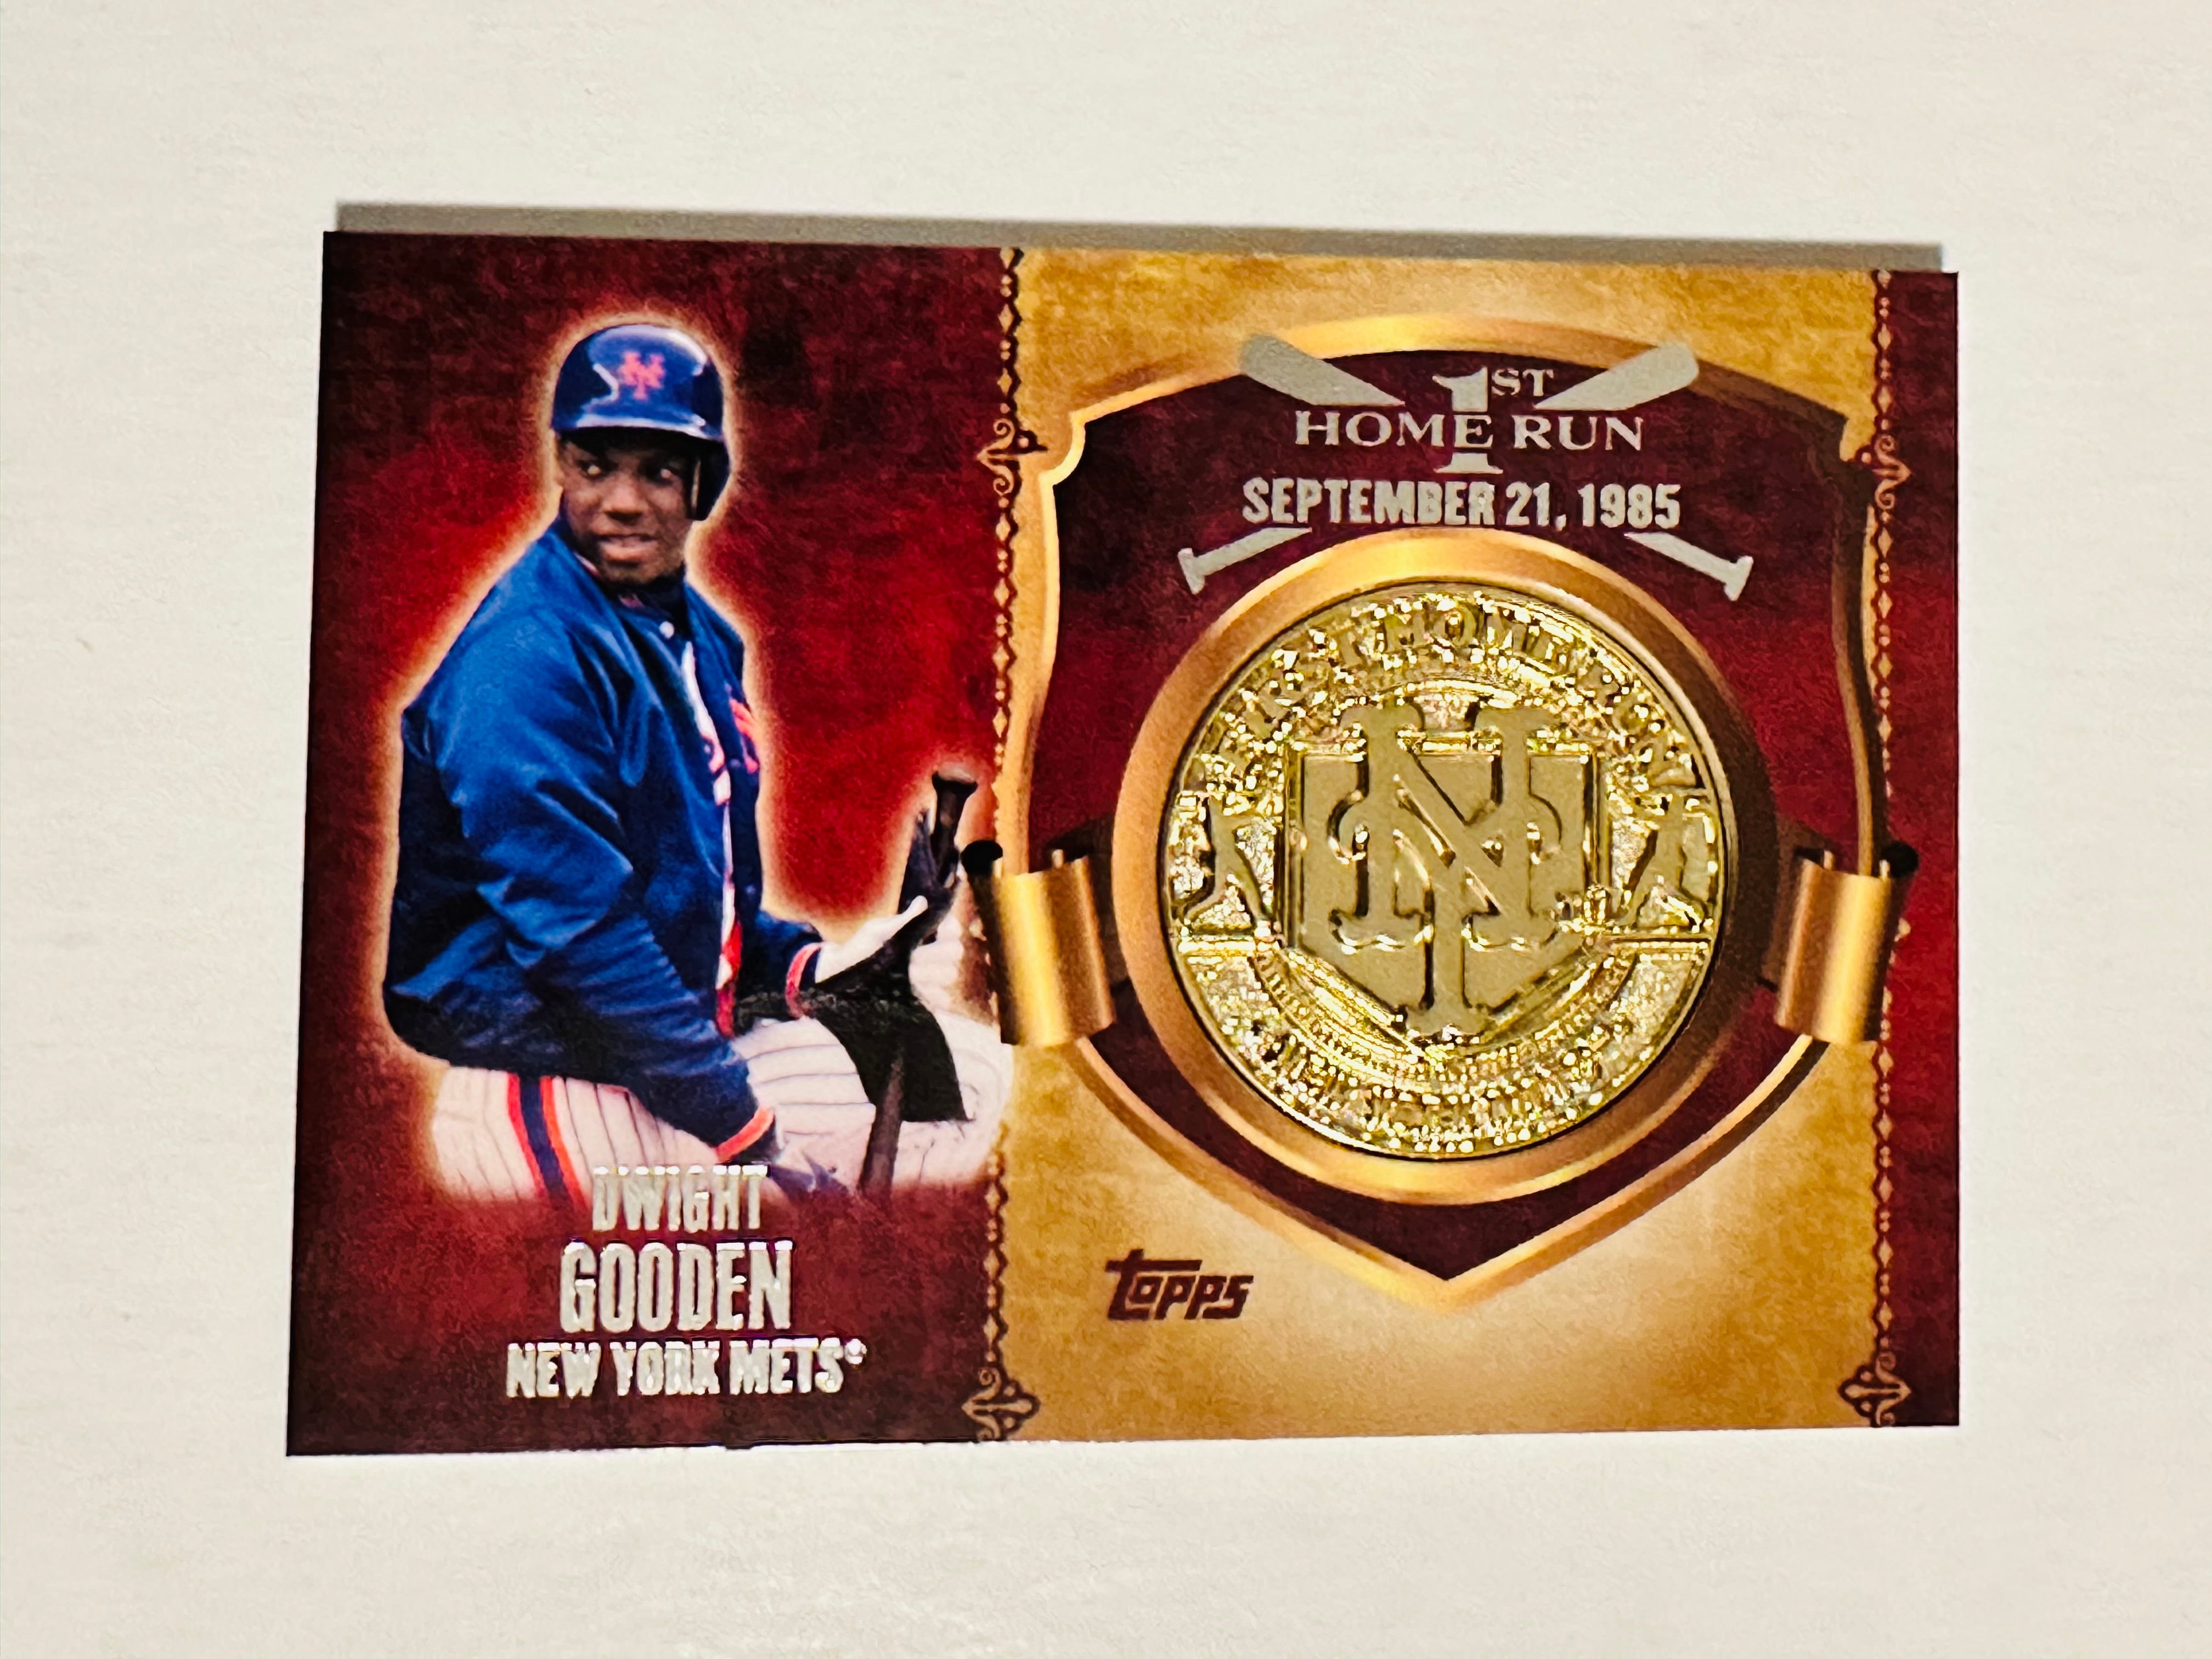 Dwight Gooden, New York Mets member of medallion insert card